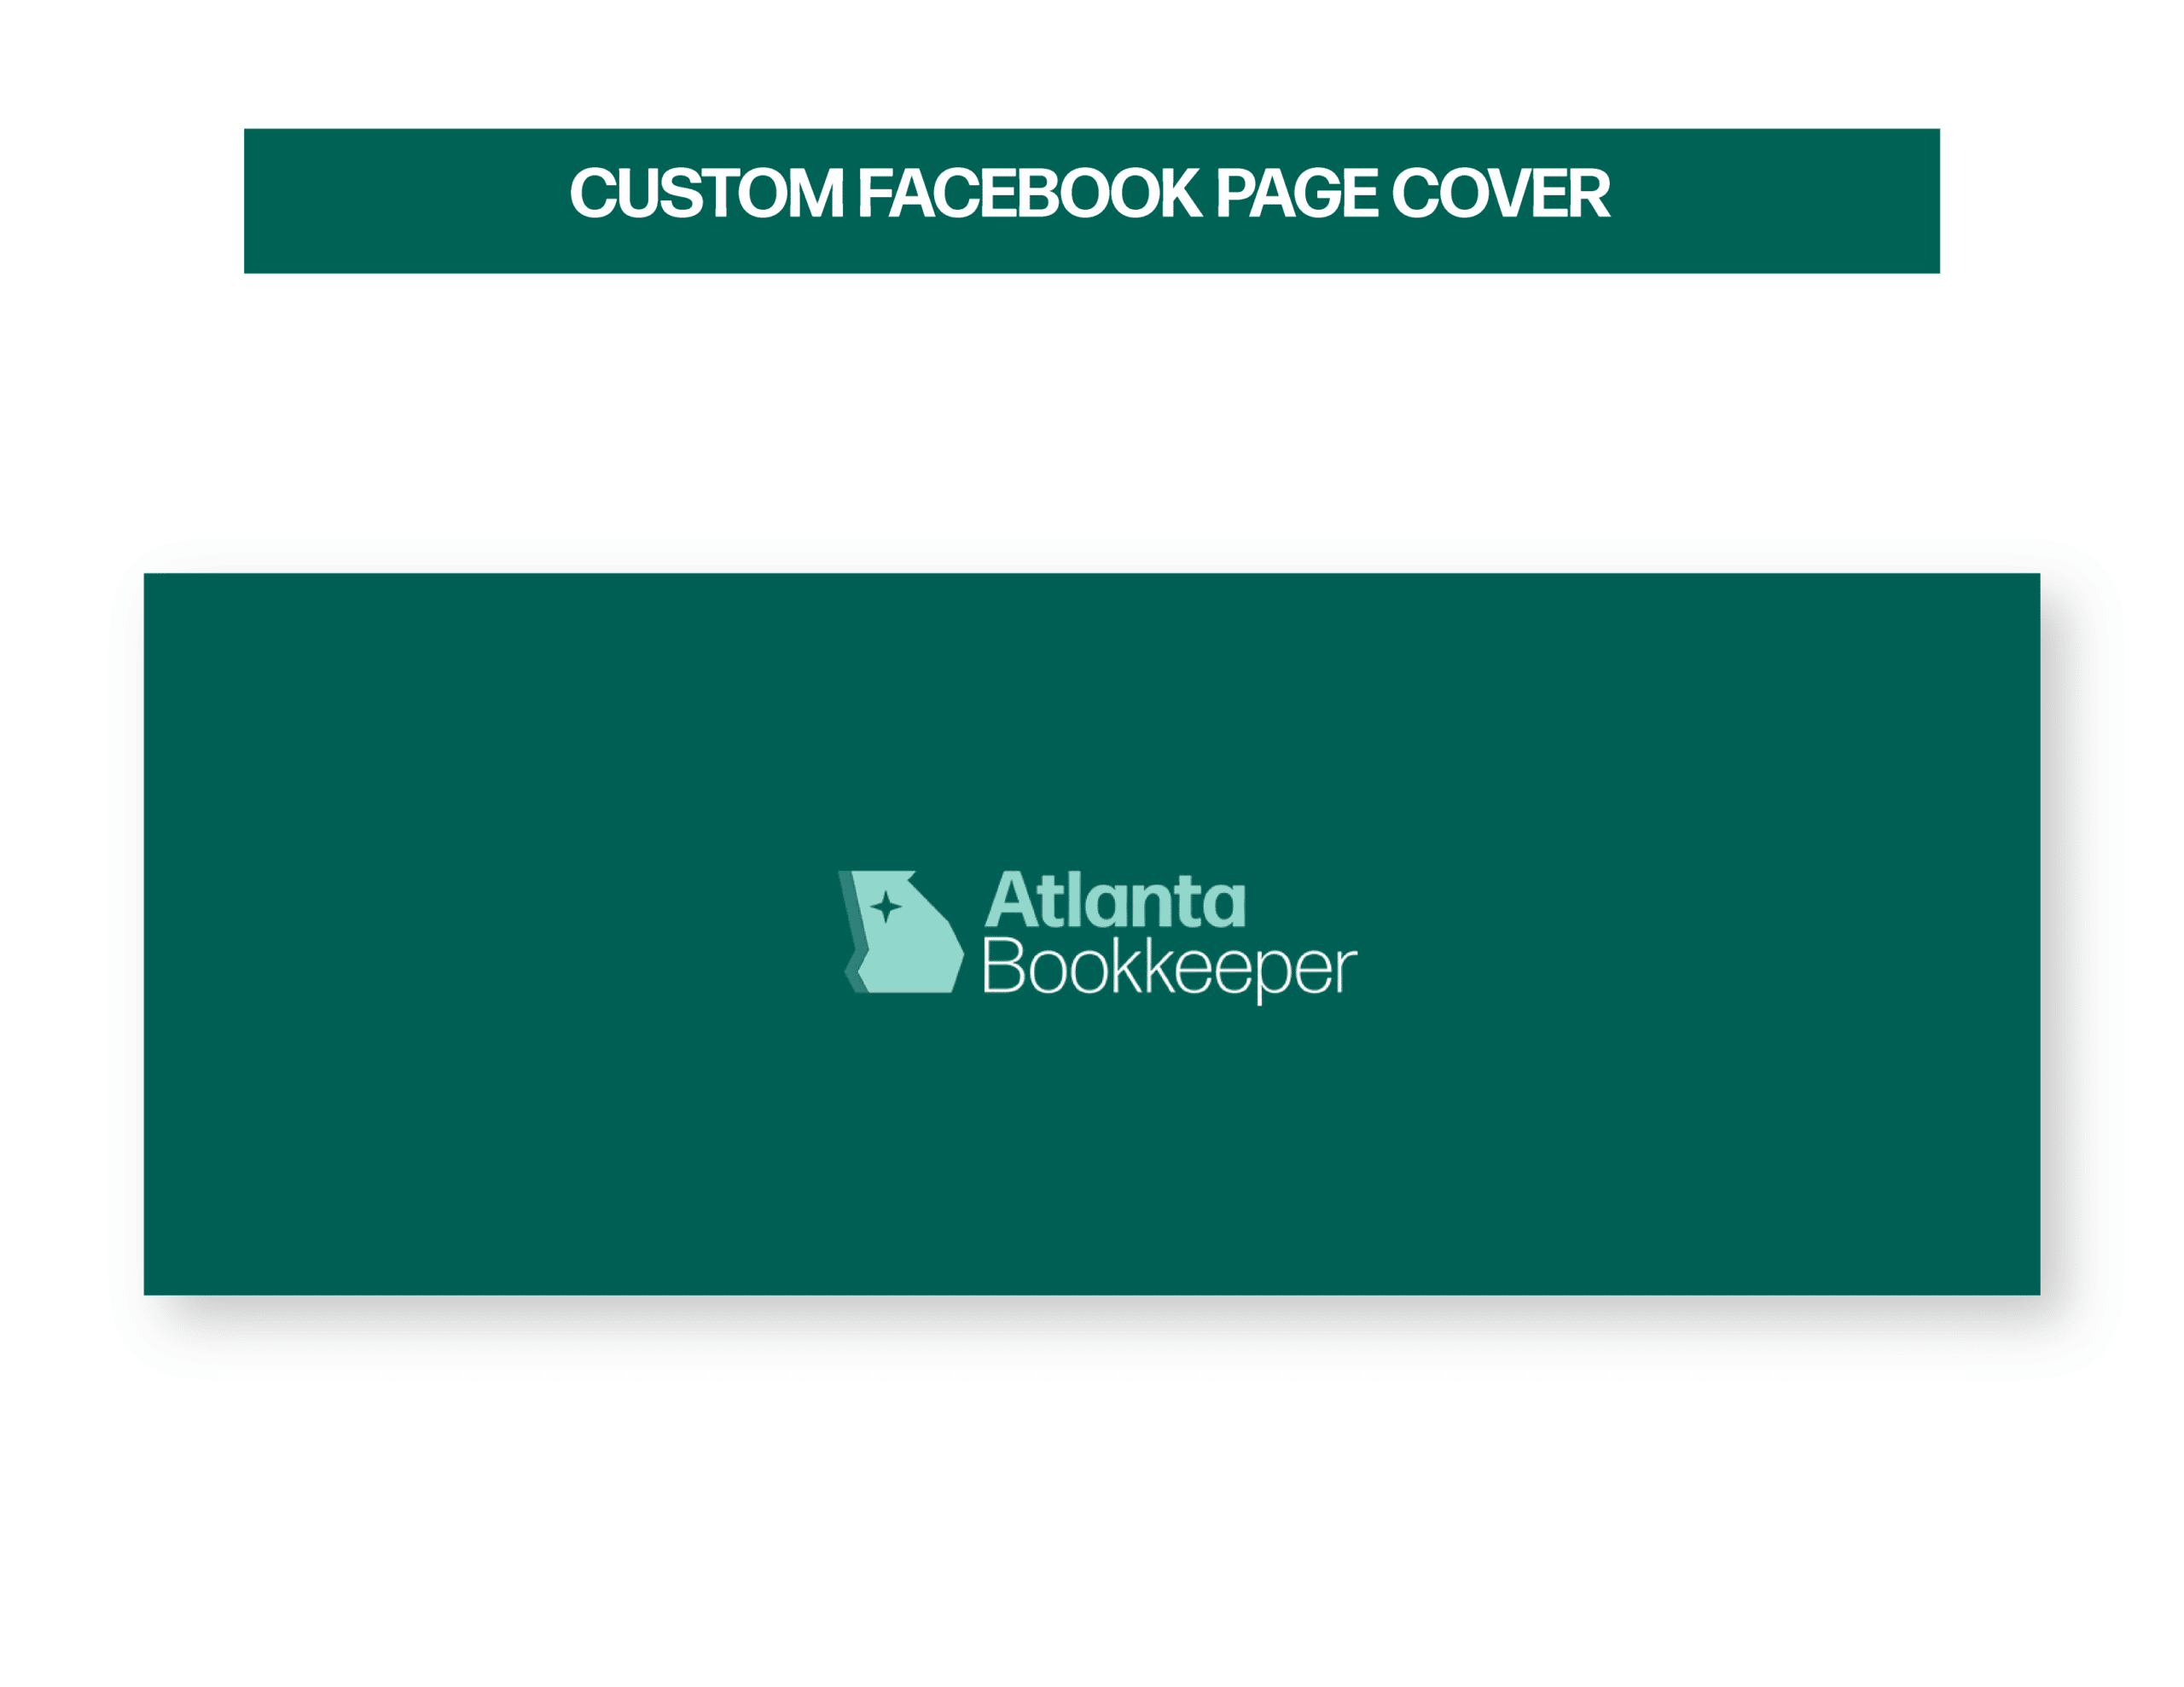 06AtlantaBookkeeper_Showcase_Custom Facebook Page Cover